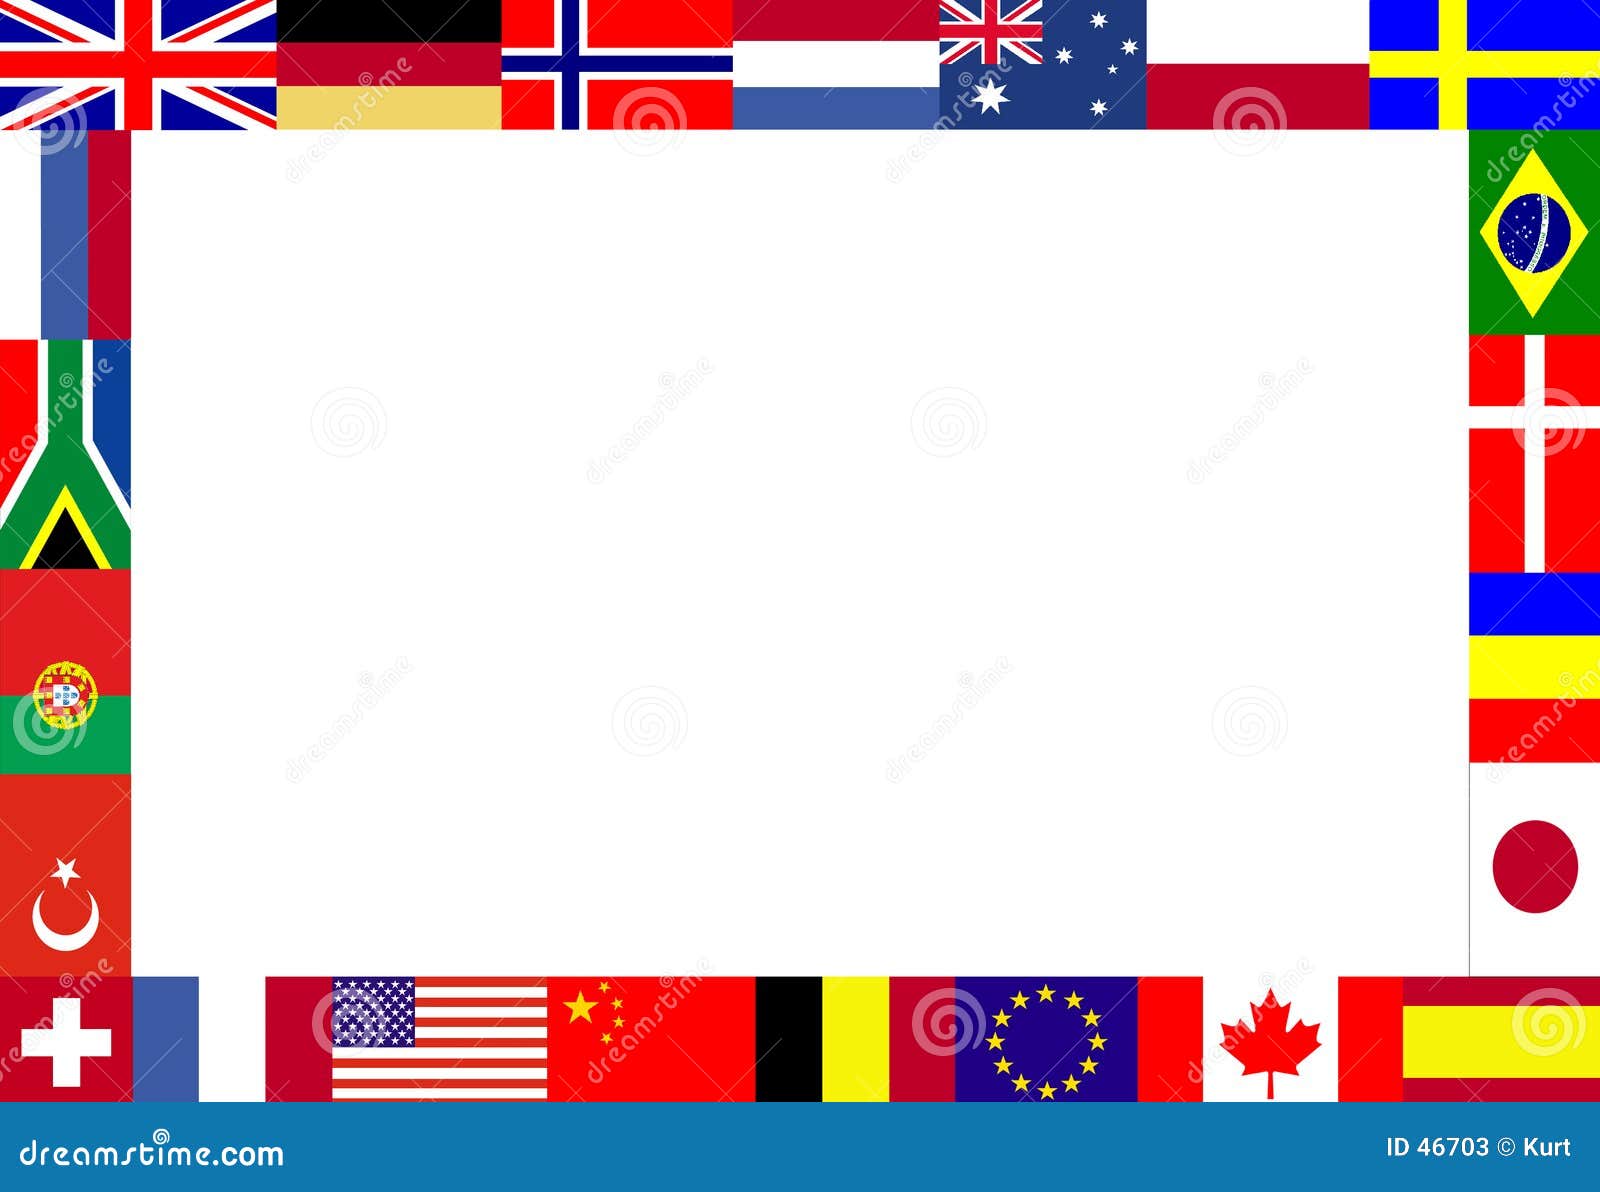 clip art flags international - photo #17